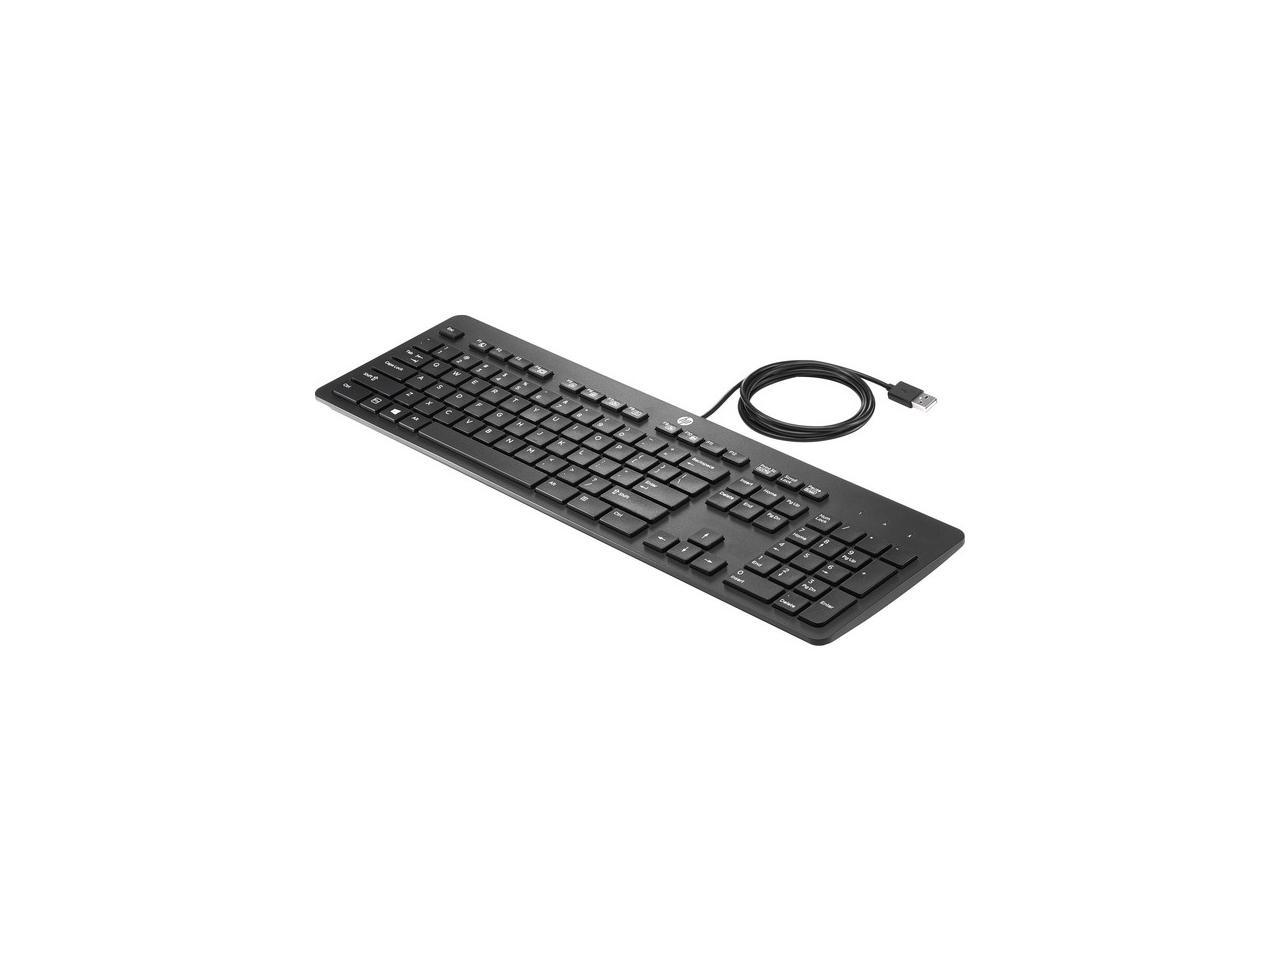 rice Bathtub Transport HP Business Slim - Keyboard - USB - US Business Keyboard - Newegg.com